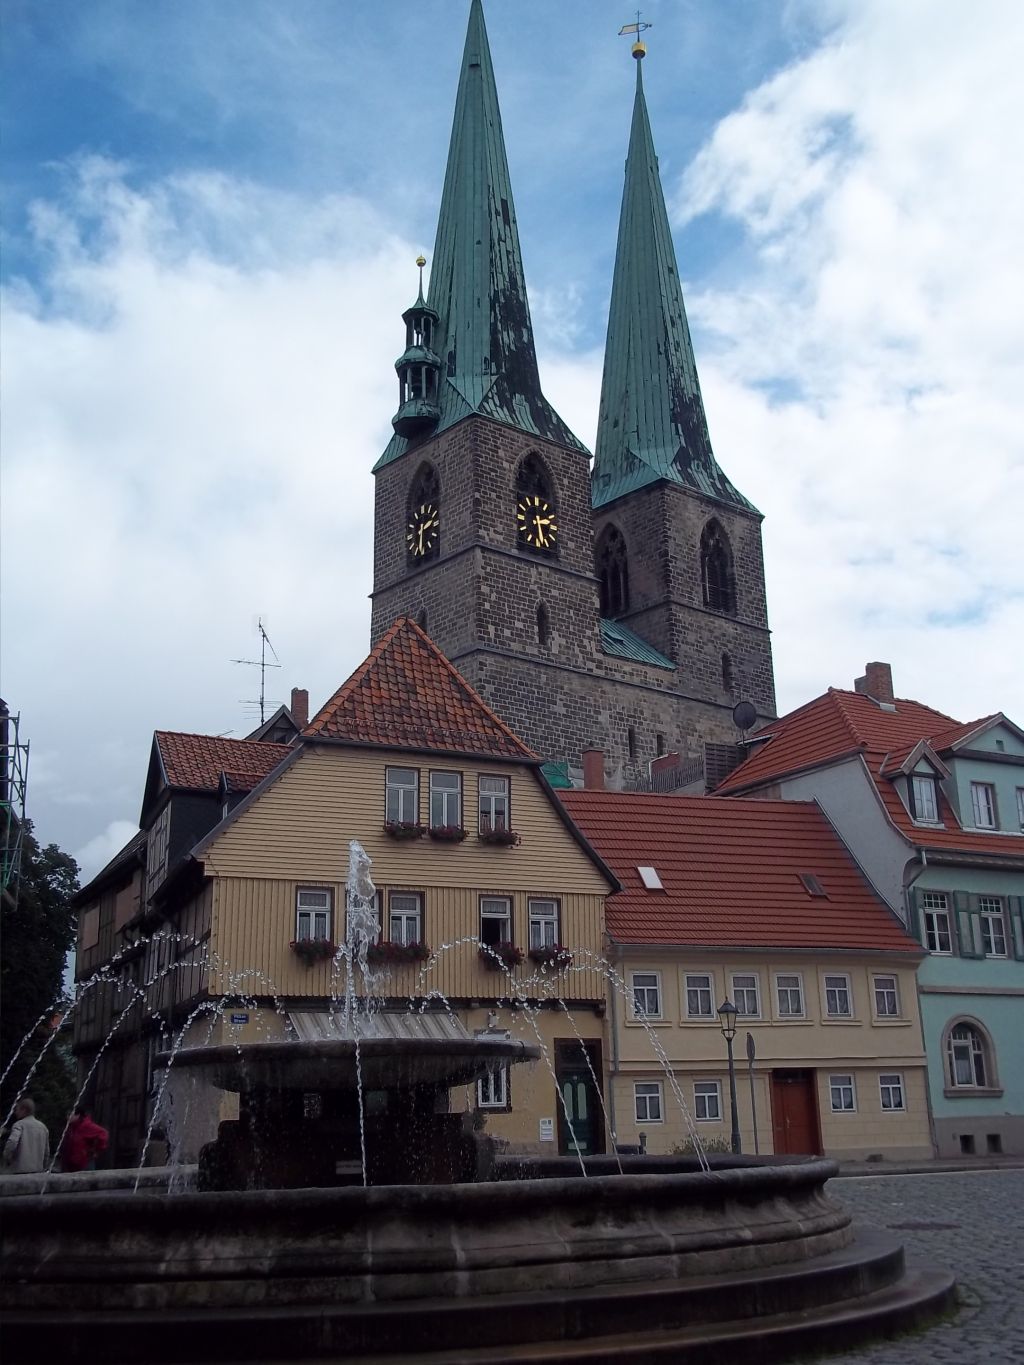 Quedlingburg Nikolaikirche tour cycling partner wanted